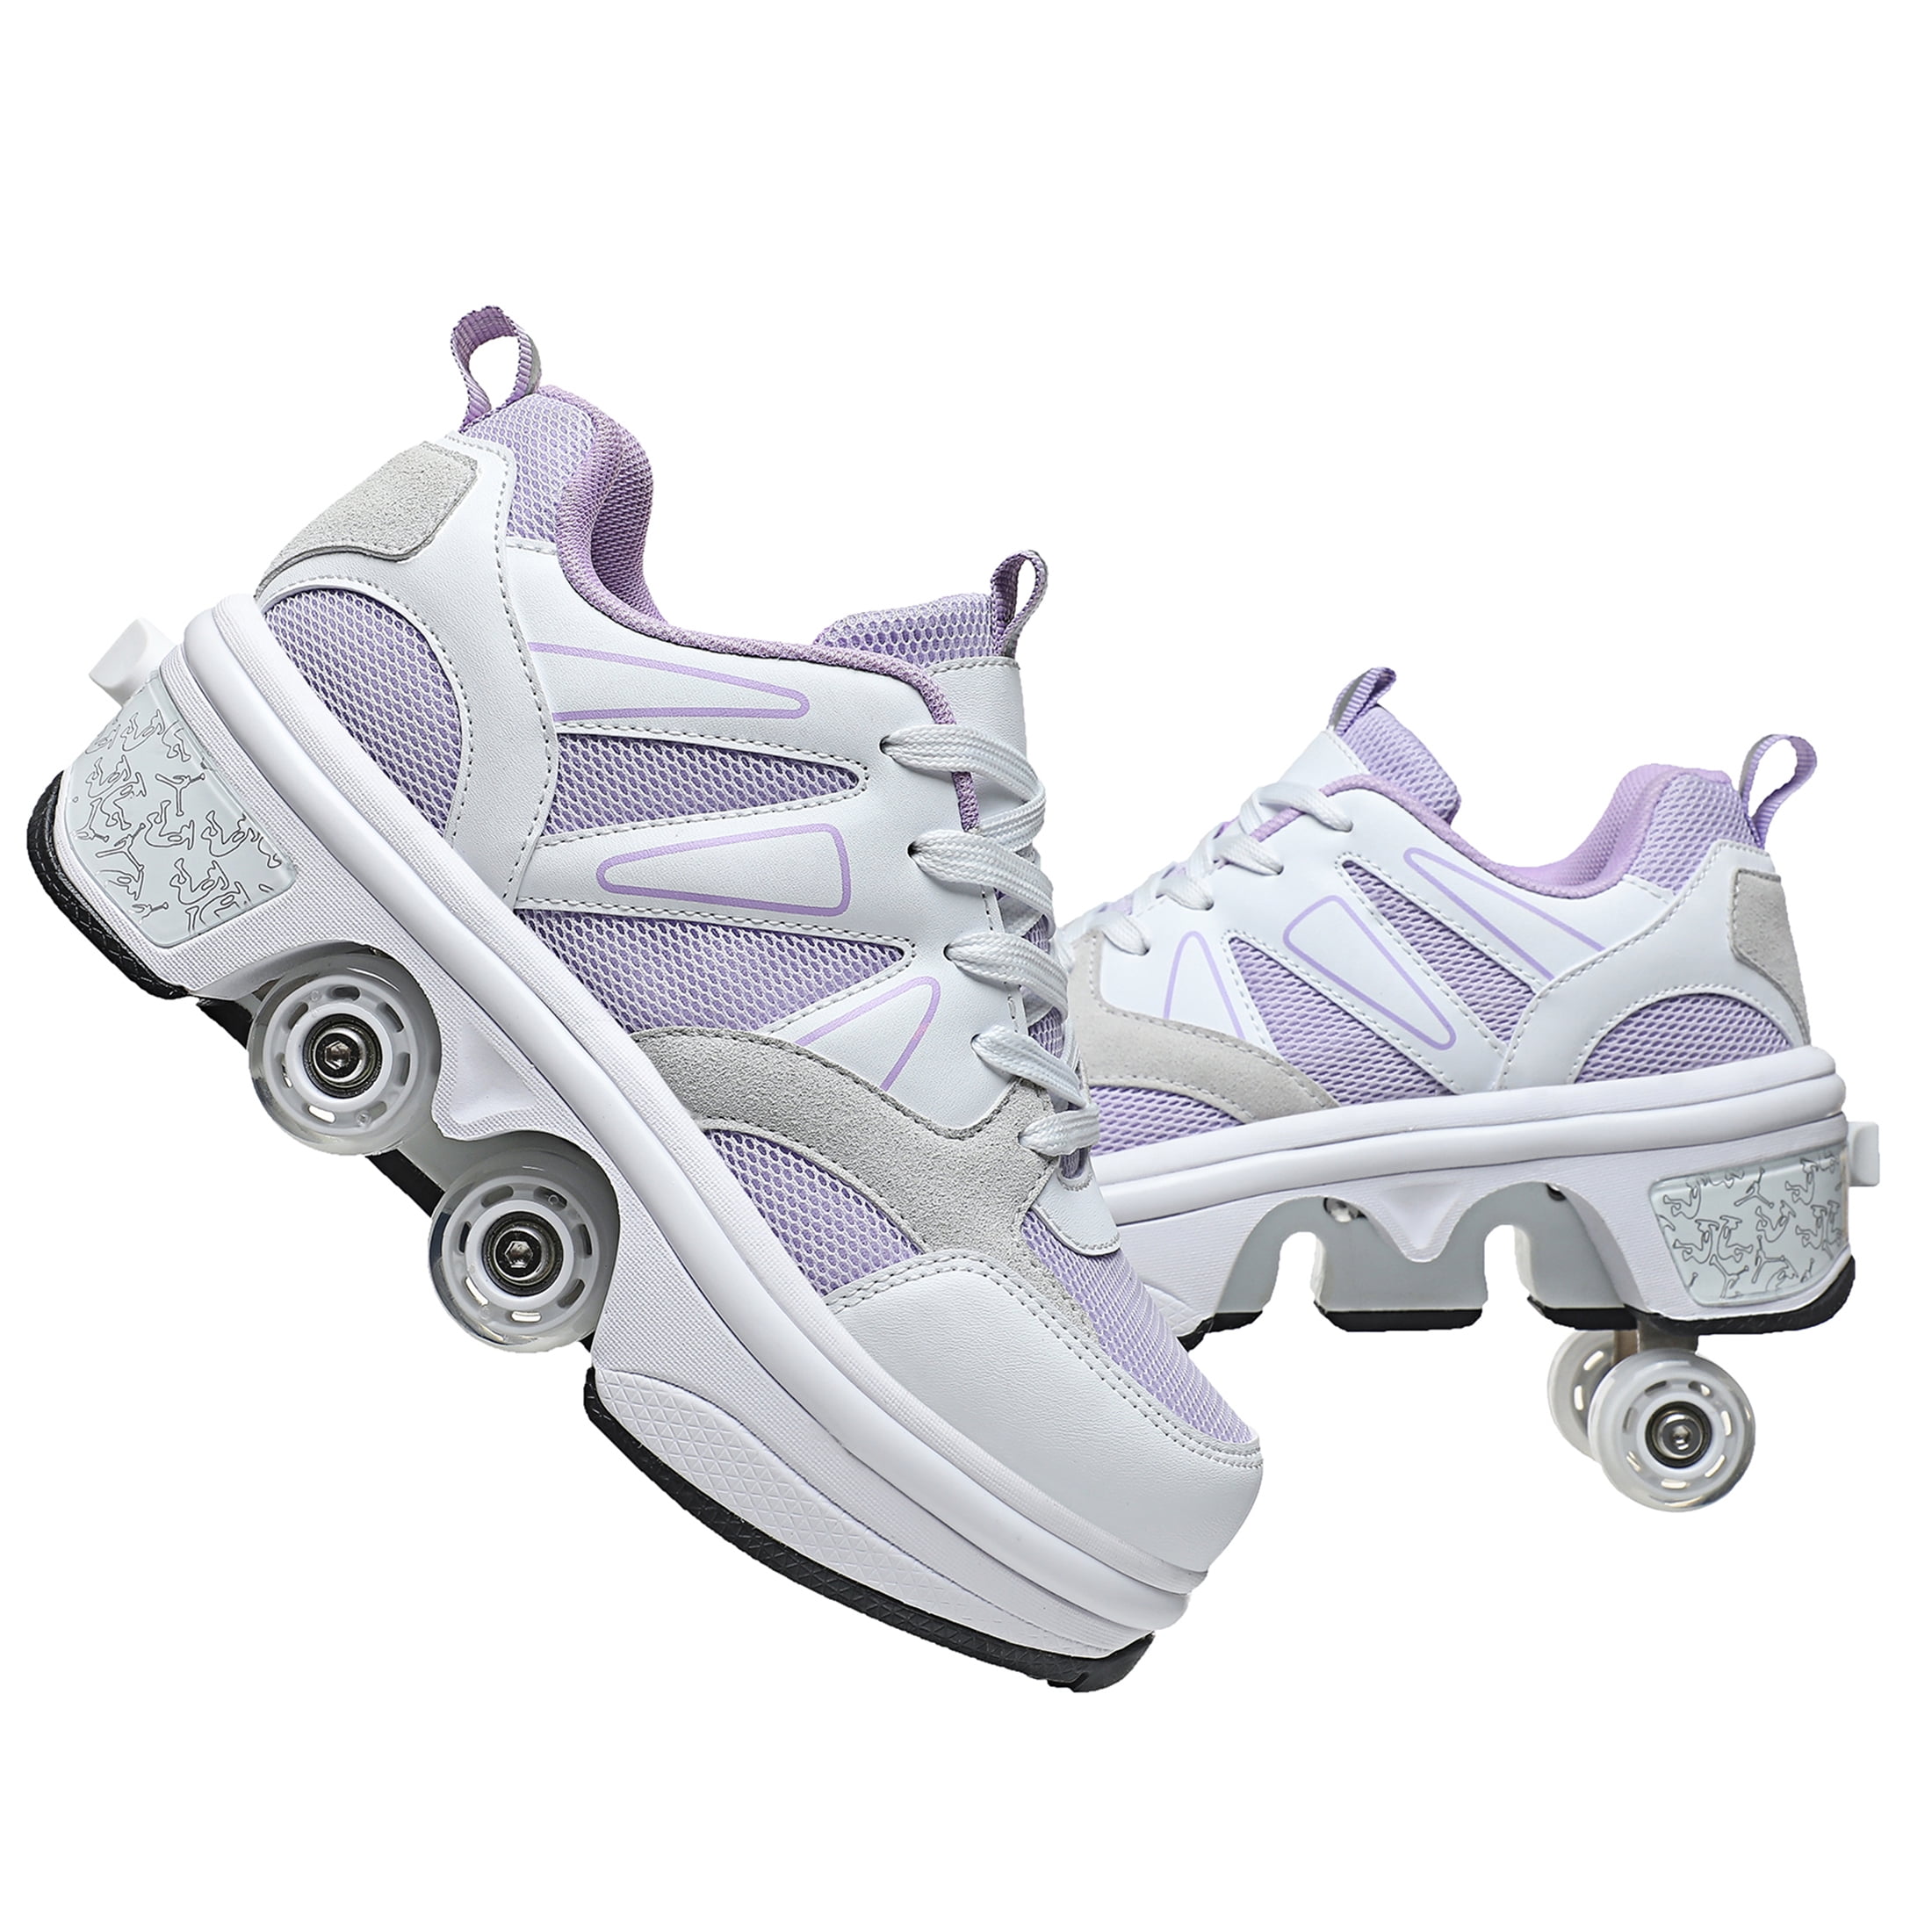 KOFUBOKE Roller Skate Shoes - Sneakers - Roller Shoes 2-in-1 Suitable ...